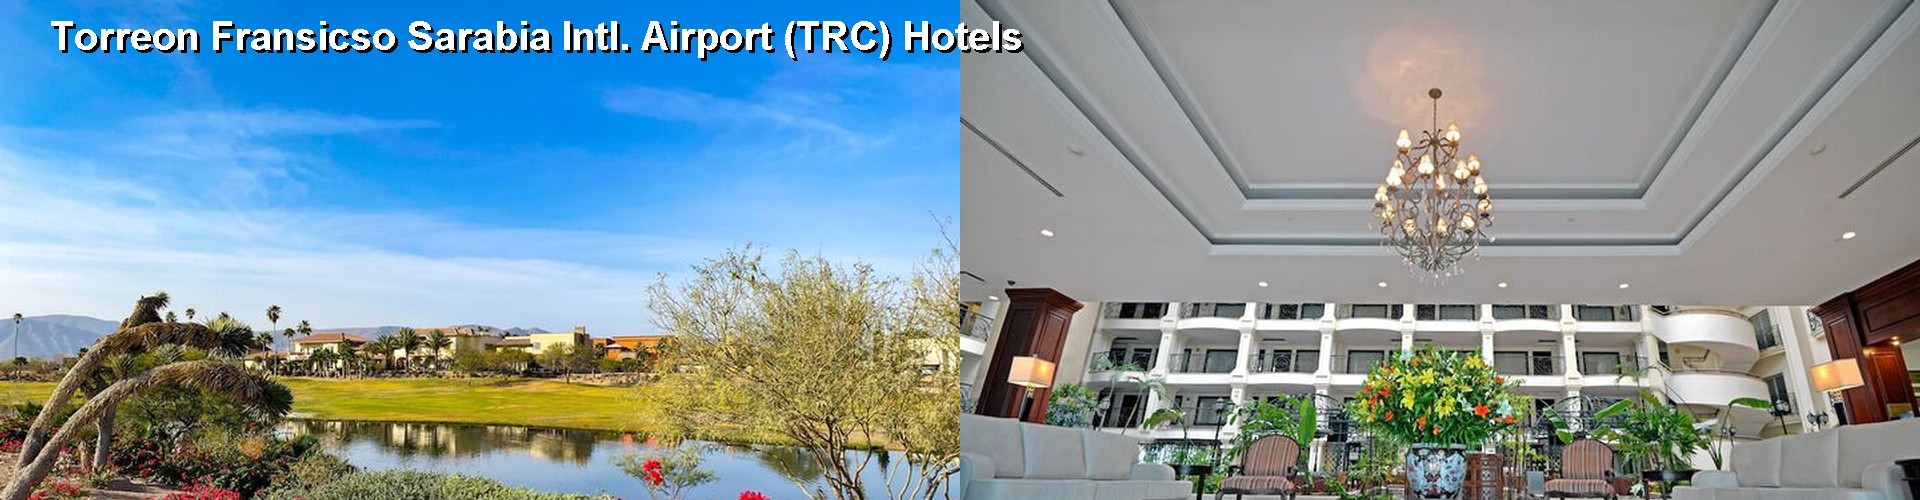 5 Best Hotels near Torreon Fransicso Sarabia Intl. Airport (TRC)